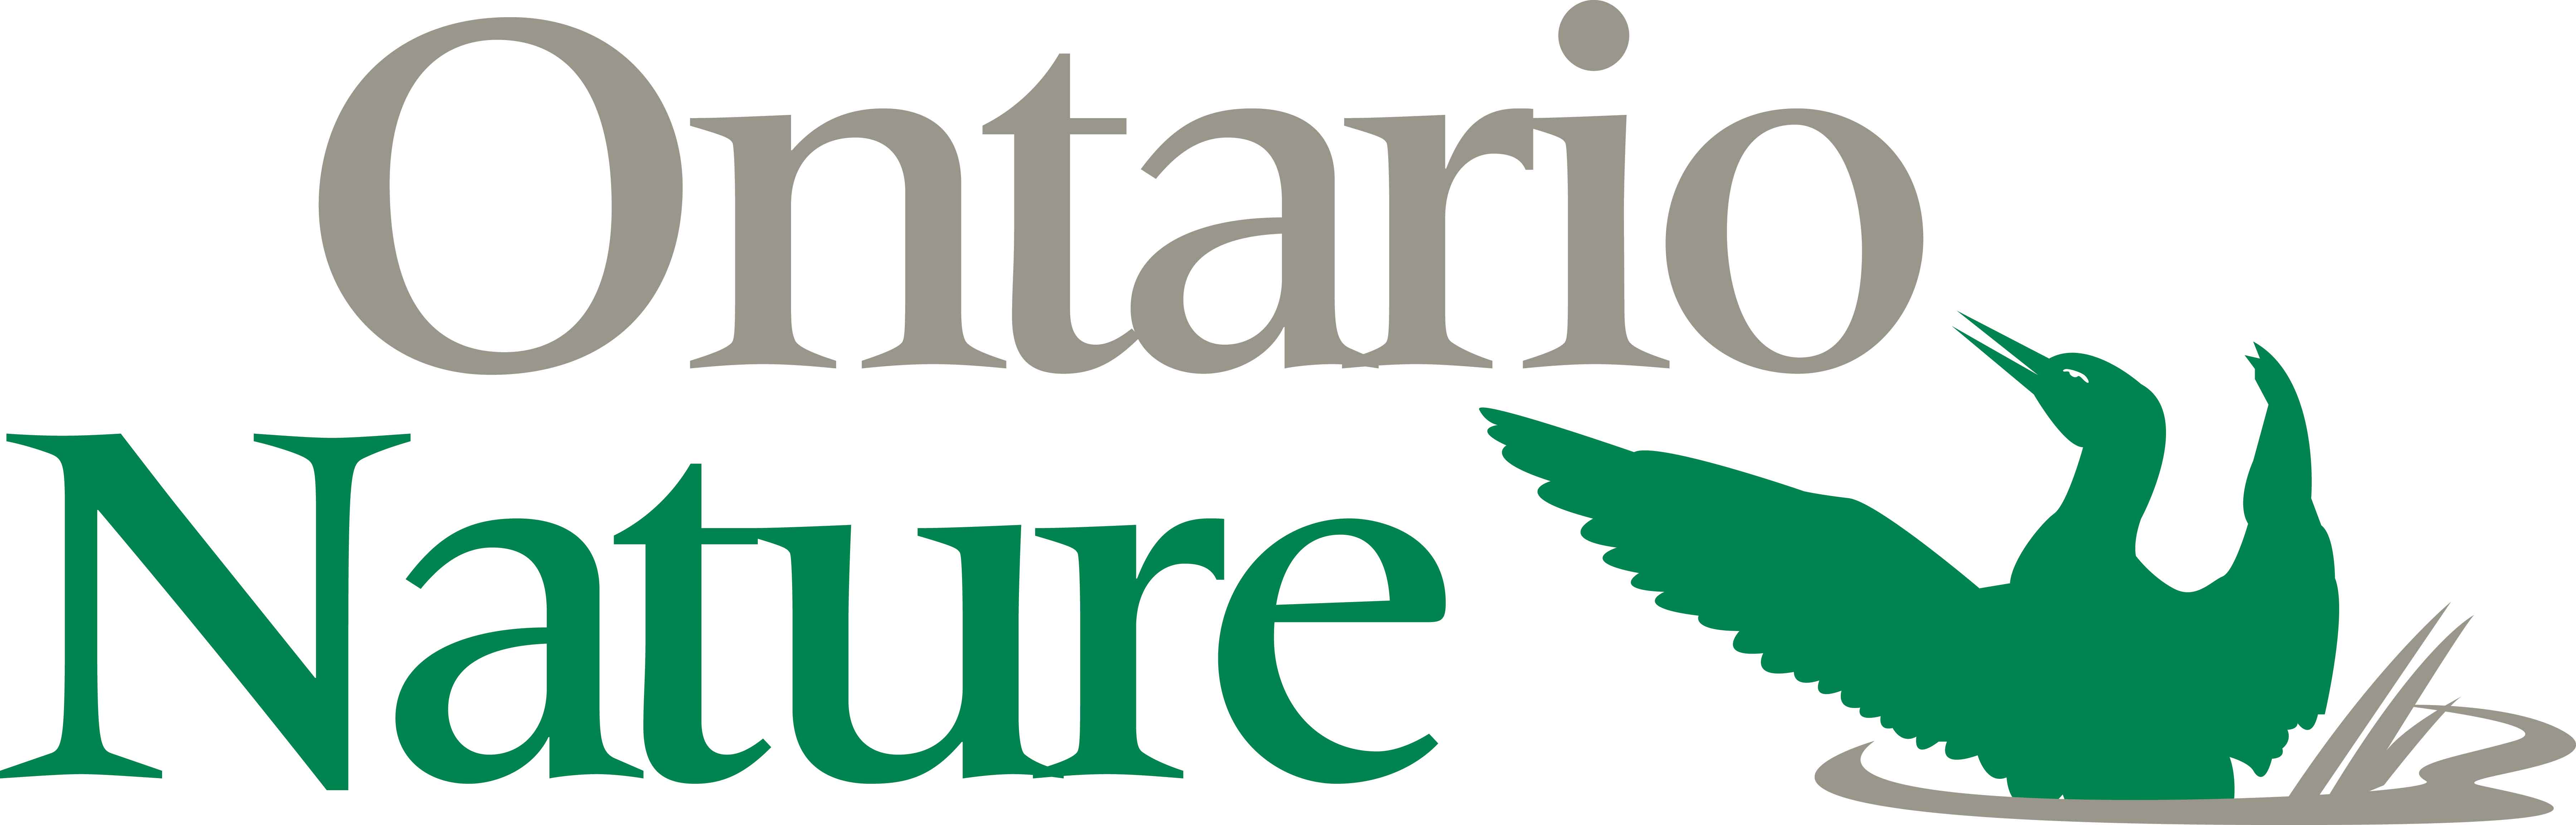 rygrad flare assistent Ontario Biodiversity Council | Ontario Nature - Ontario Biodiversity Council